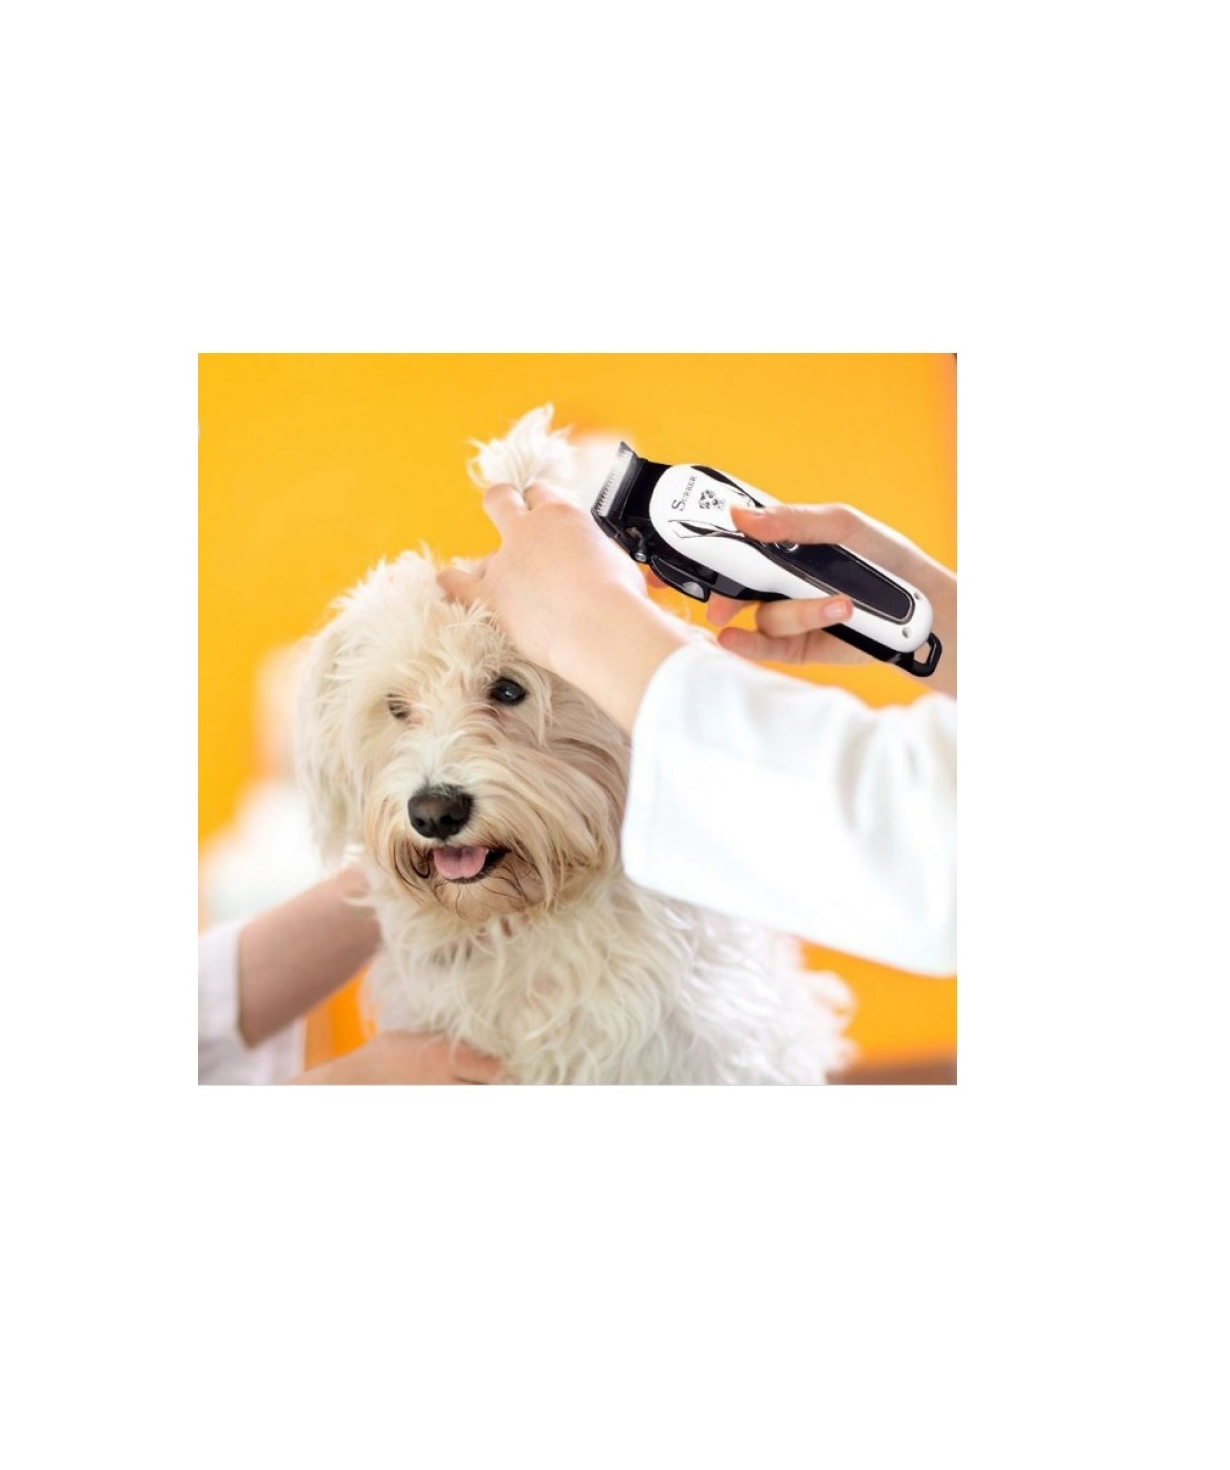 Hair clipper `SURKER` for animals SK-80501